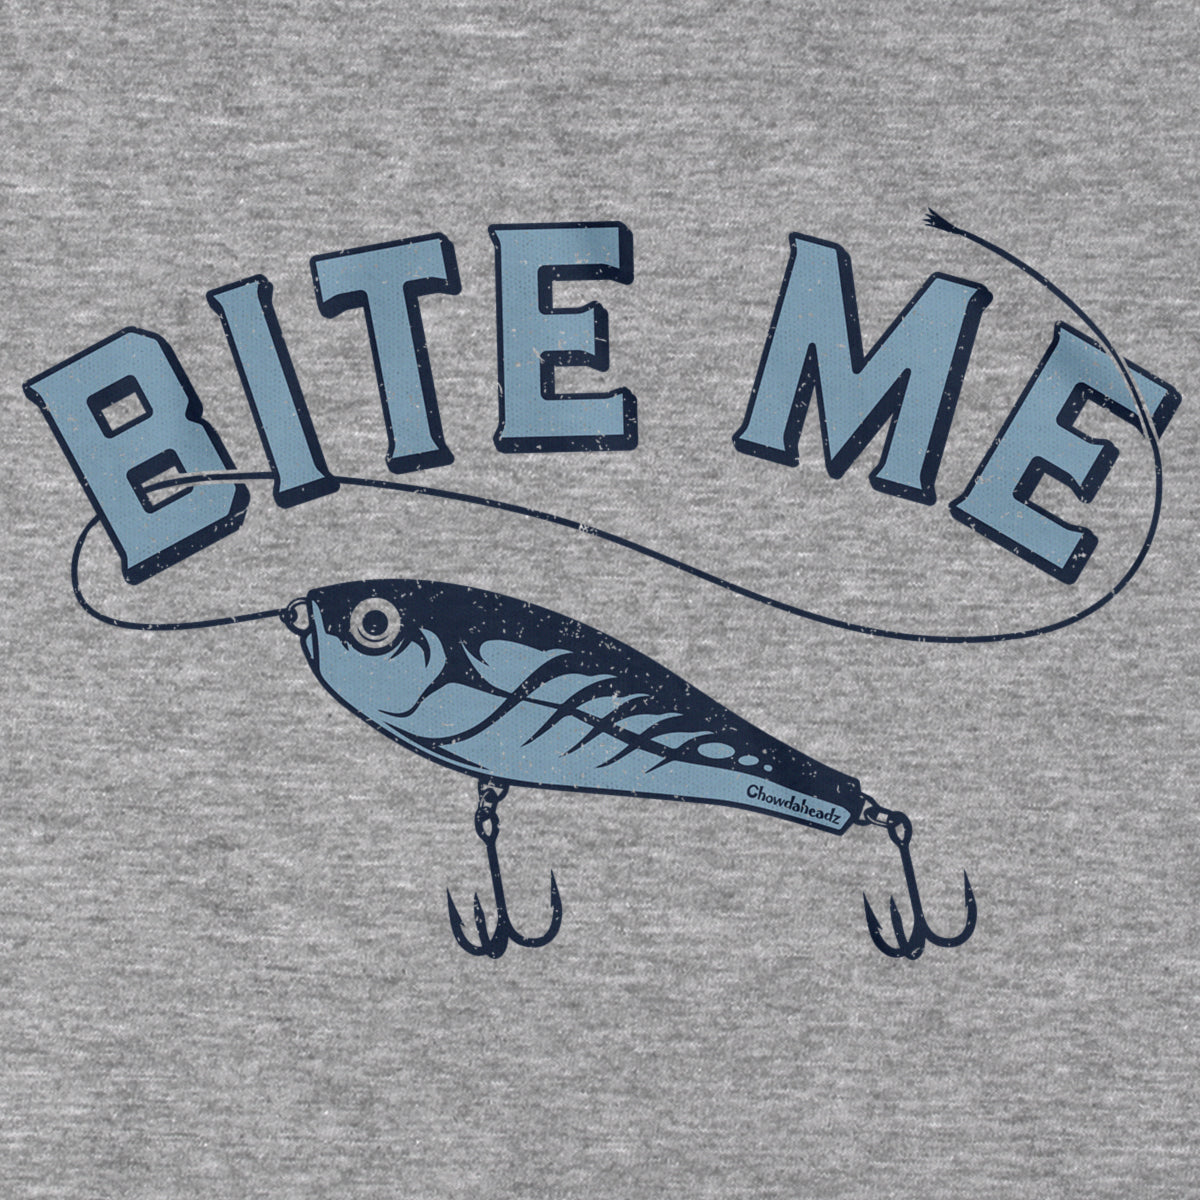 Bite Me Fishing T-Shirt - Chowdaheadz